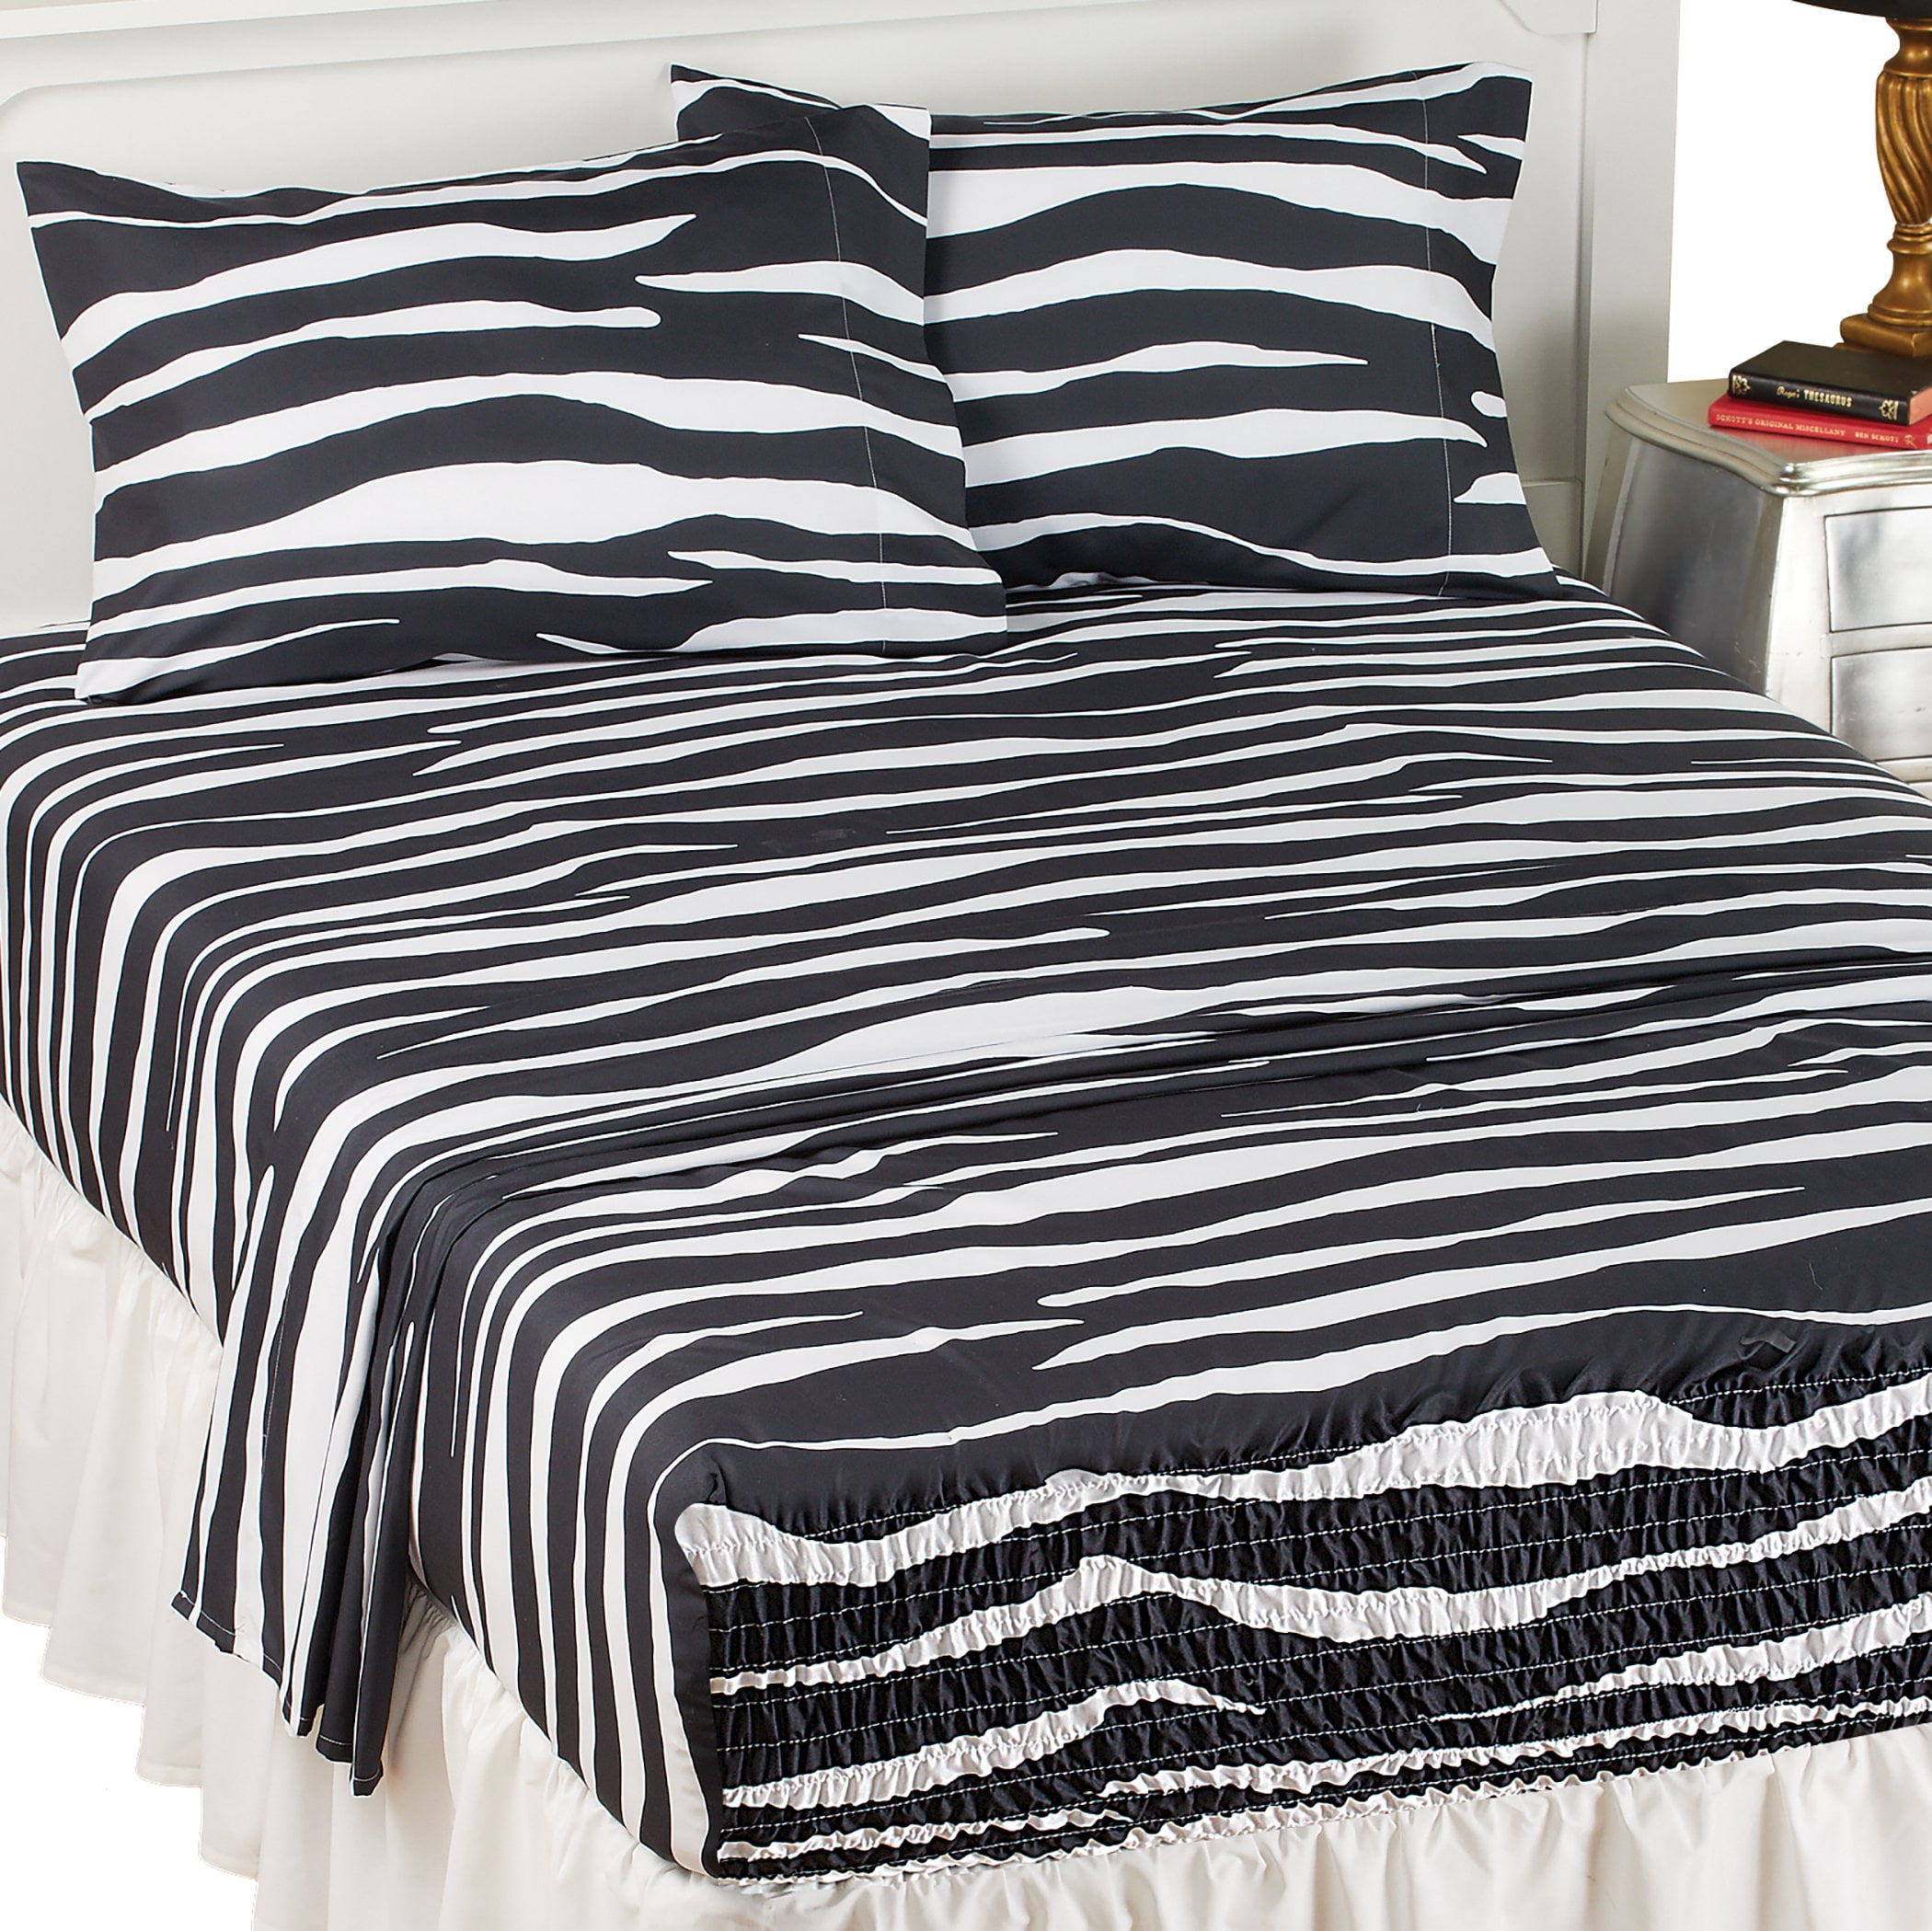 Details about   Wild Pink Jungle Exotic Zebra Stripes Animal Print King Bed Sheet Set 